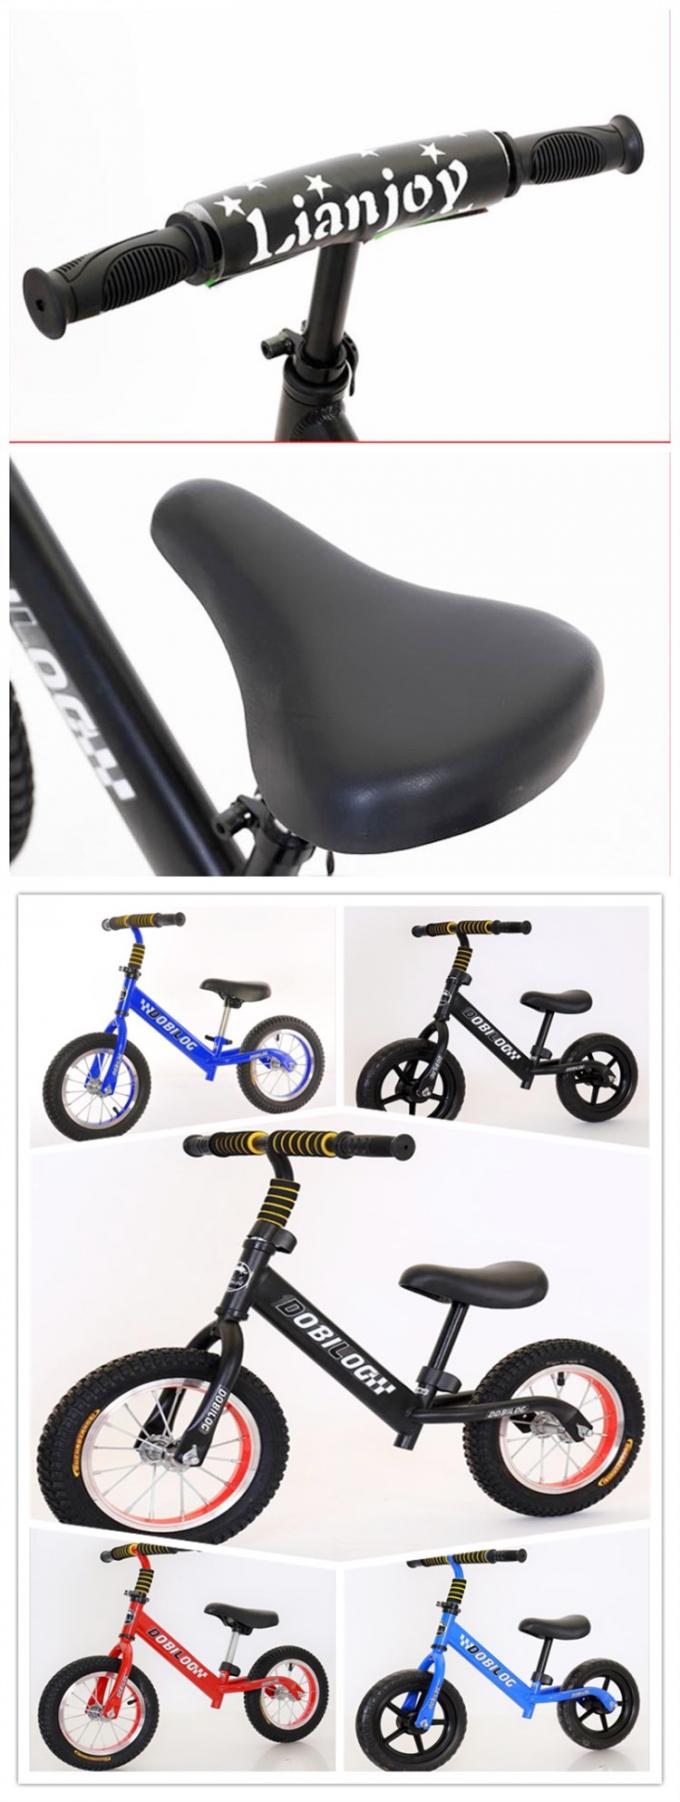 Cheap Chinese factory direct baby balance bike/light weight children balance bicycle